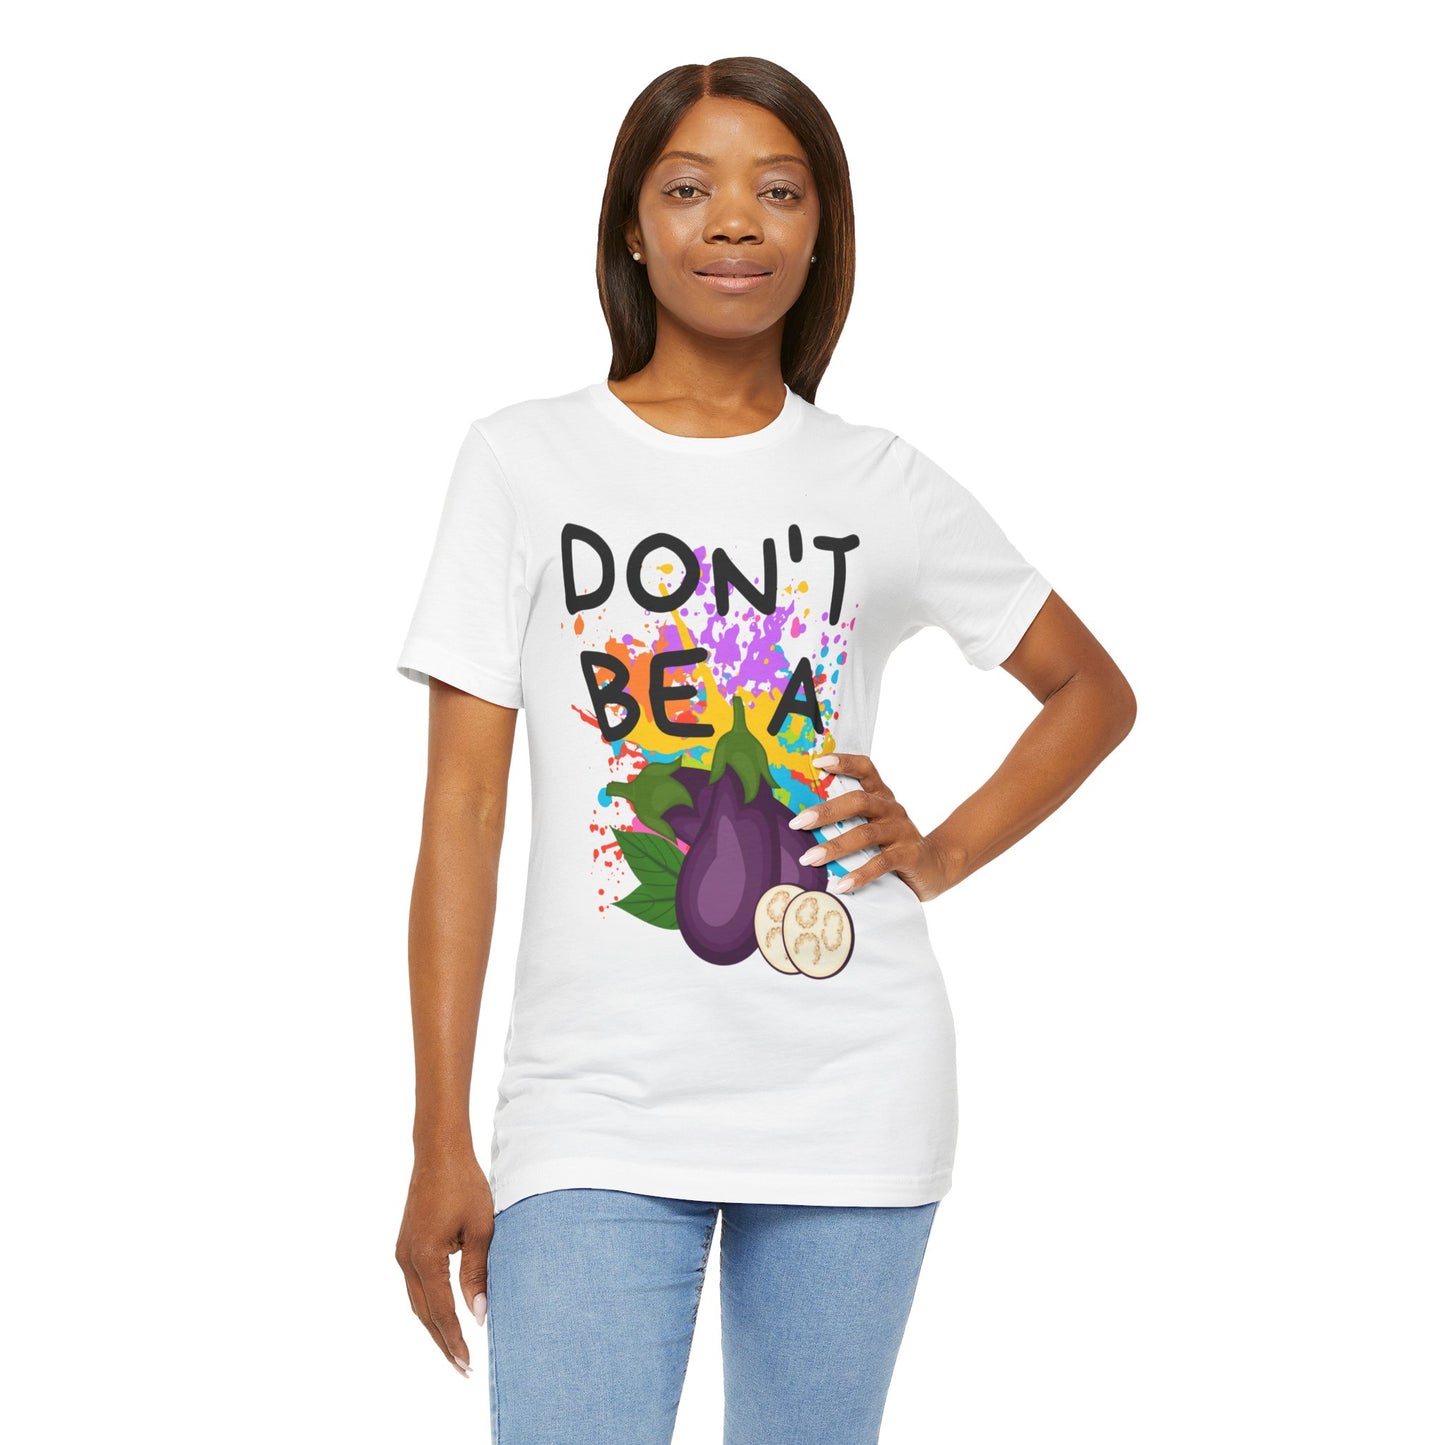 Don't Be an Eggplant Short Sleeve Unisex Tee